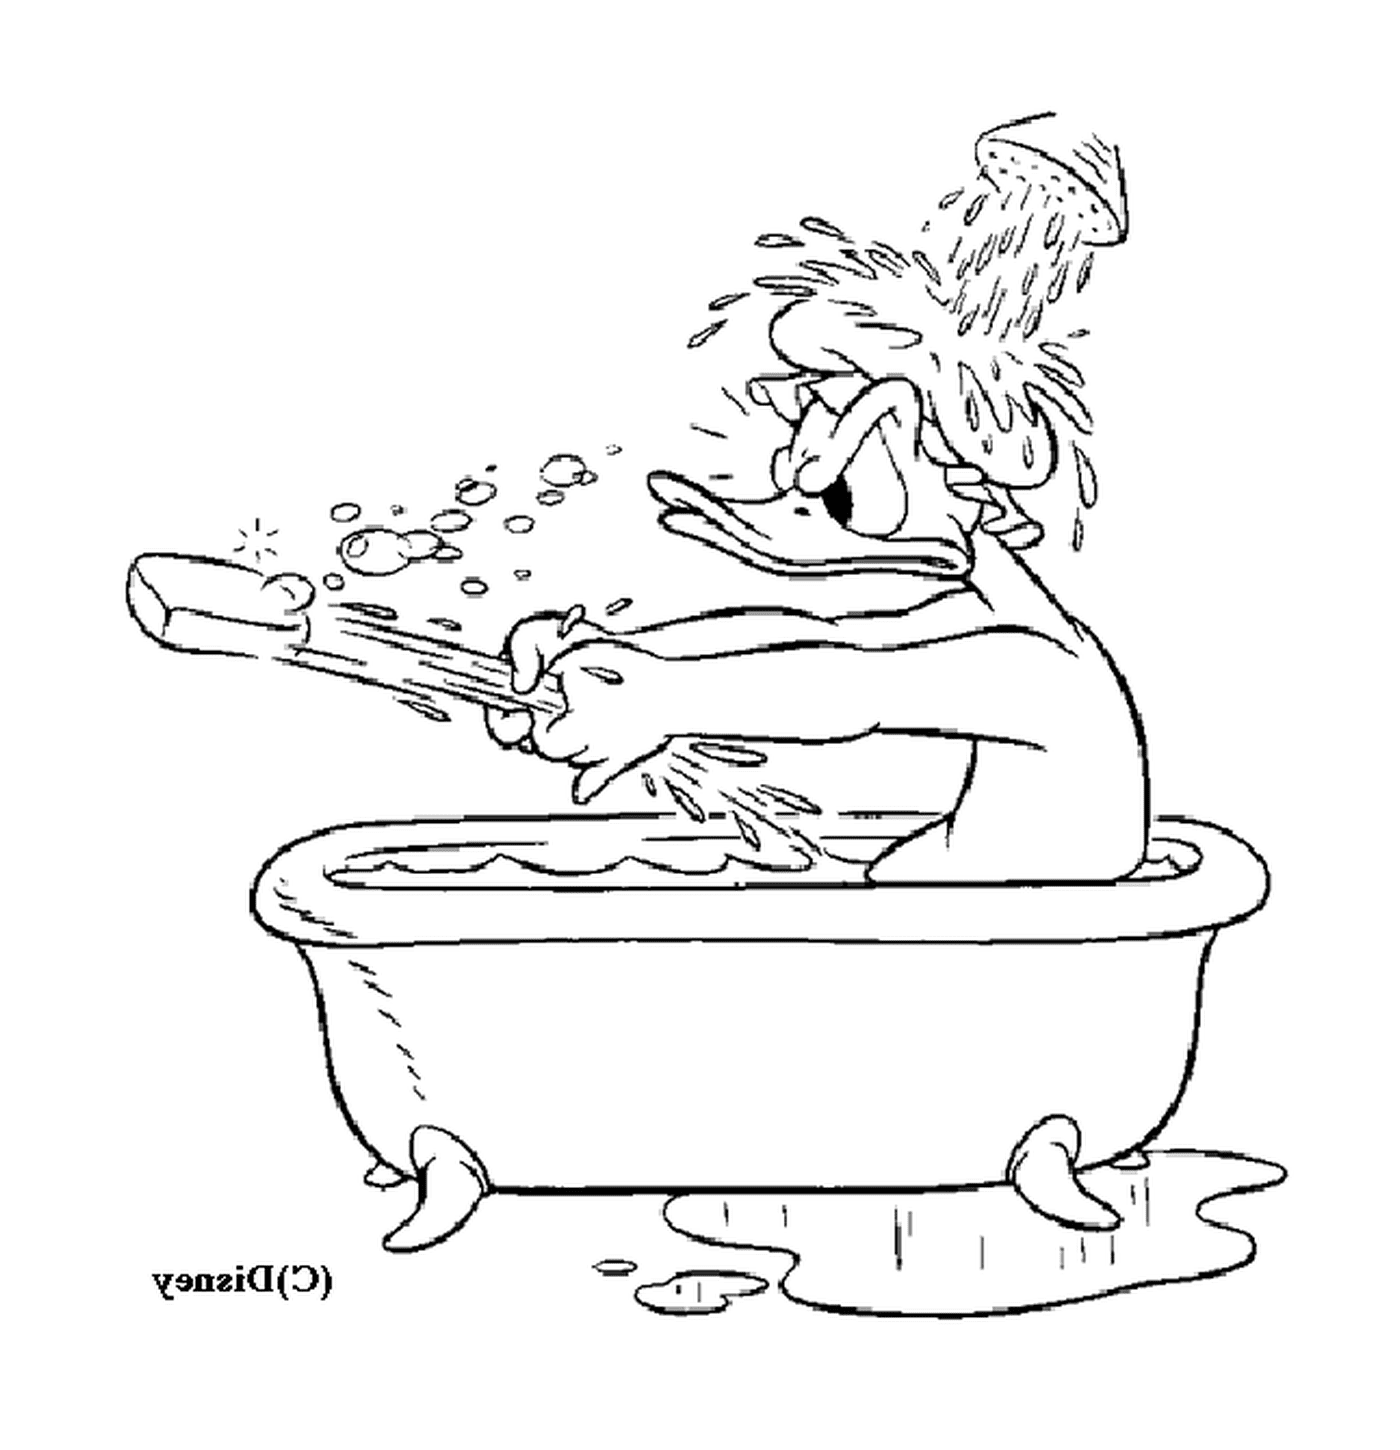   Donald prend un bain relaxant 